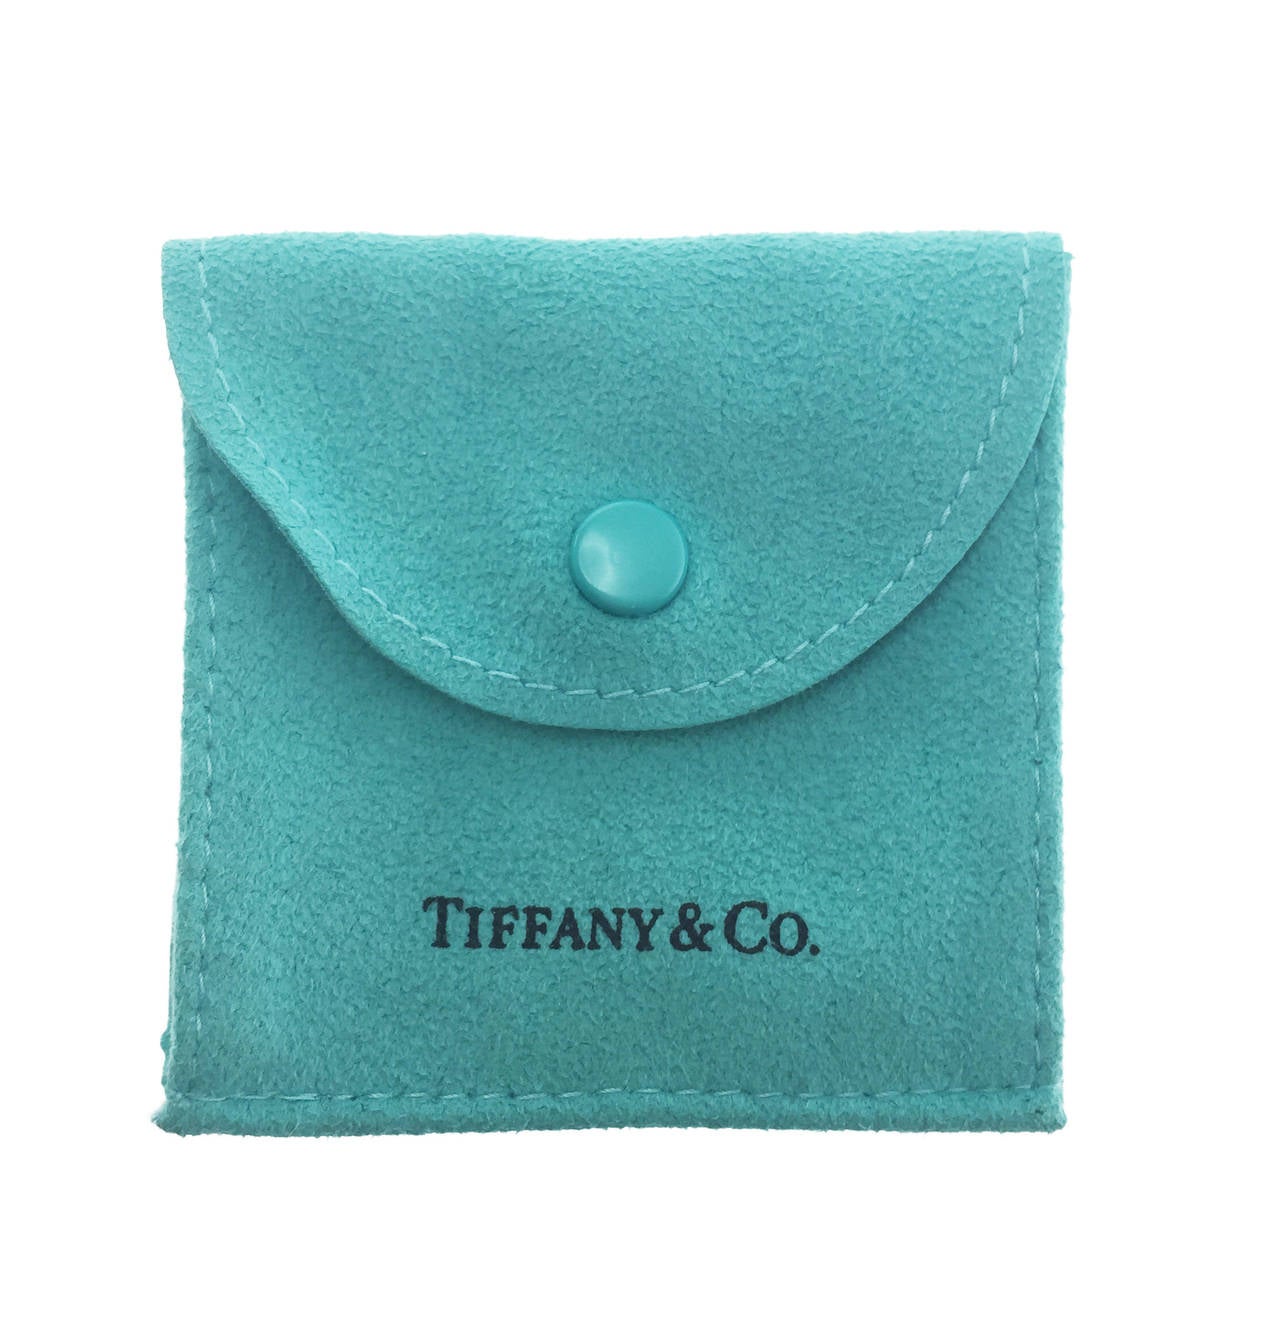 1995 Tiffany & Co. Gold Weave Cufflinks 2